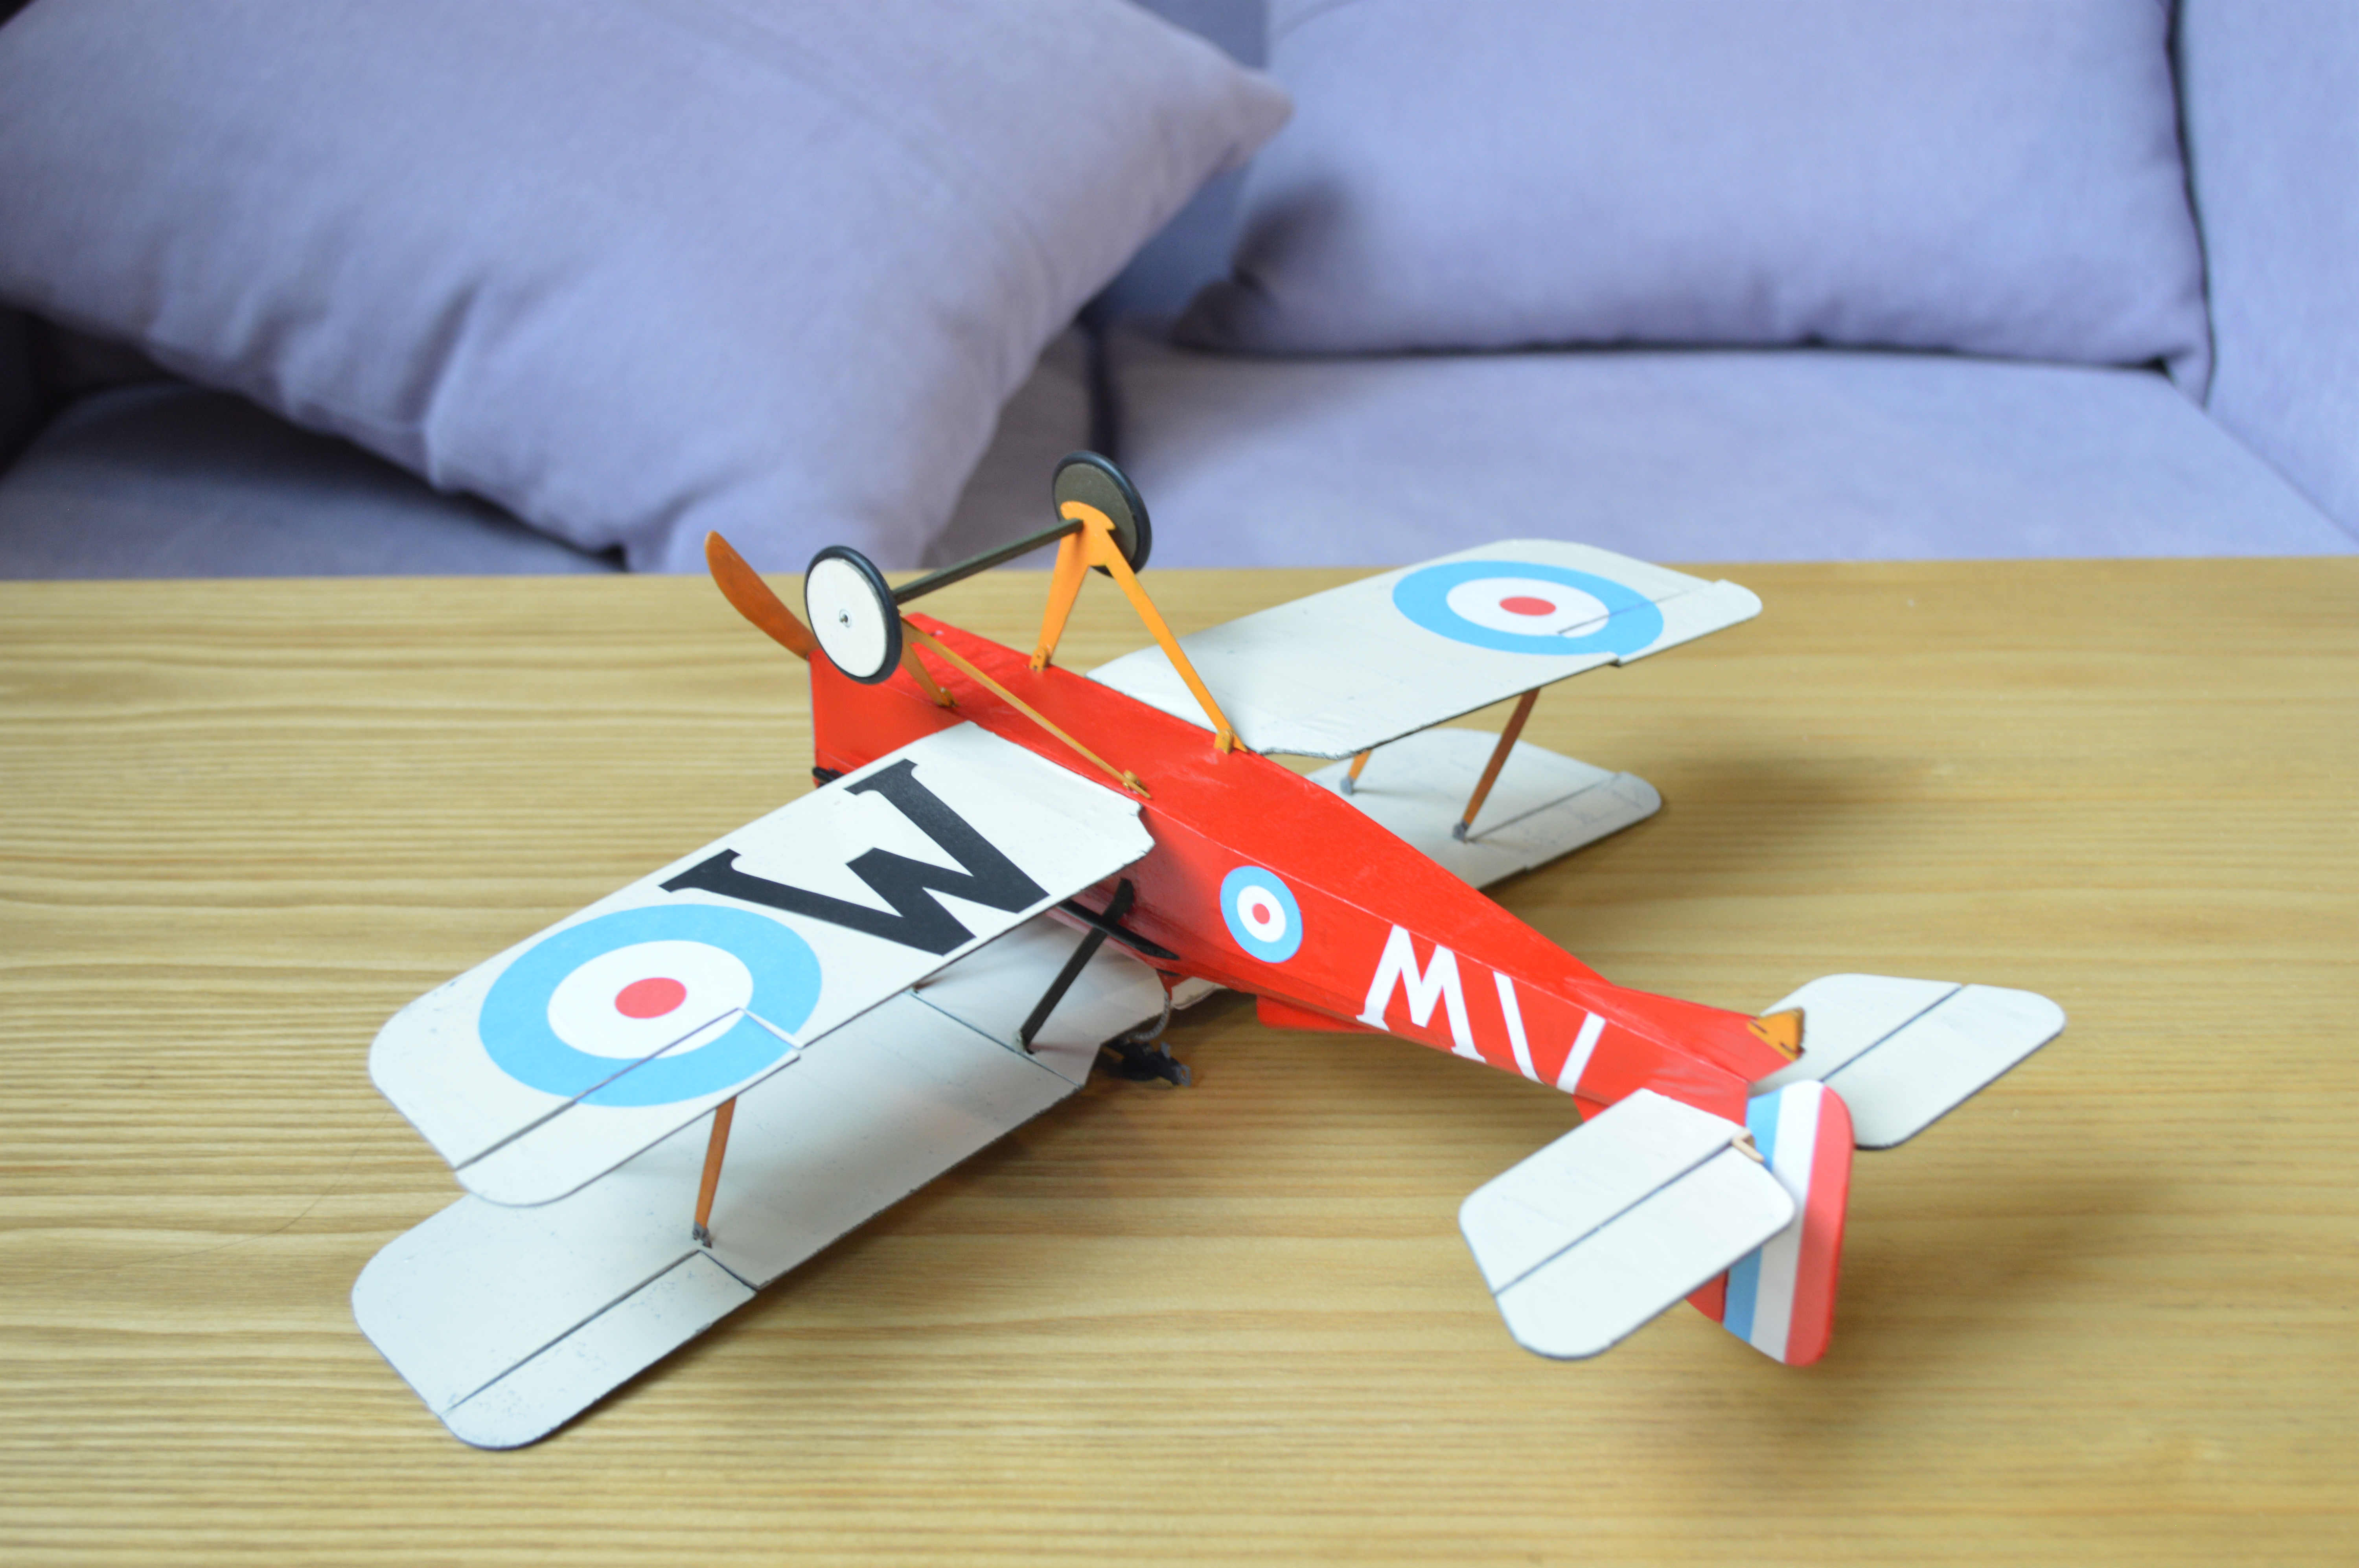 Tony-Rays-AeroModel-RAF-SE5a-480mm-Wingspan-Balsa-Wood-Laser-Cut-Biplane-RC-Airplane-Warbird-KIT-1798680-6